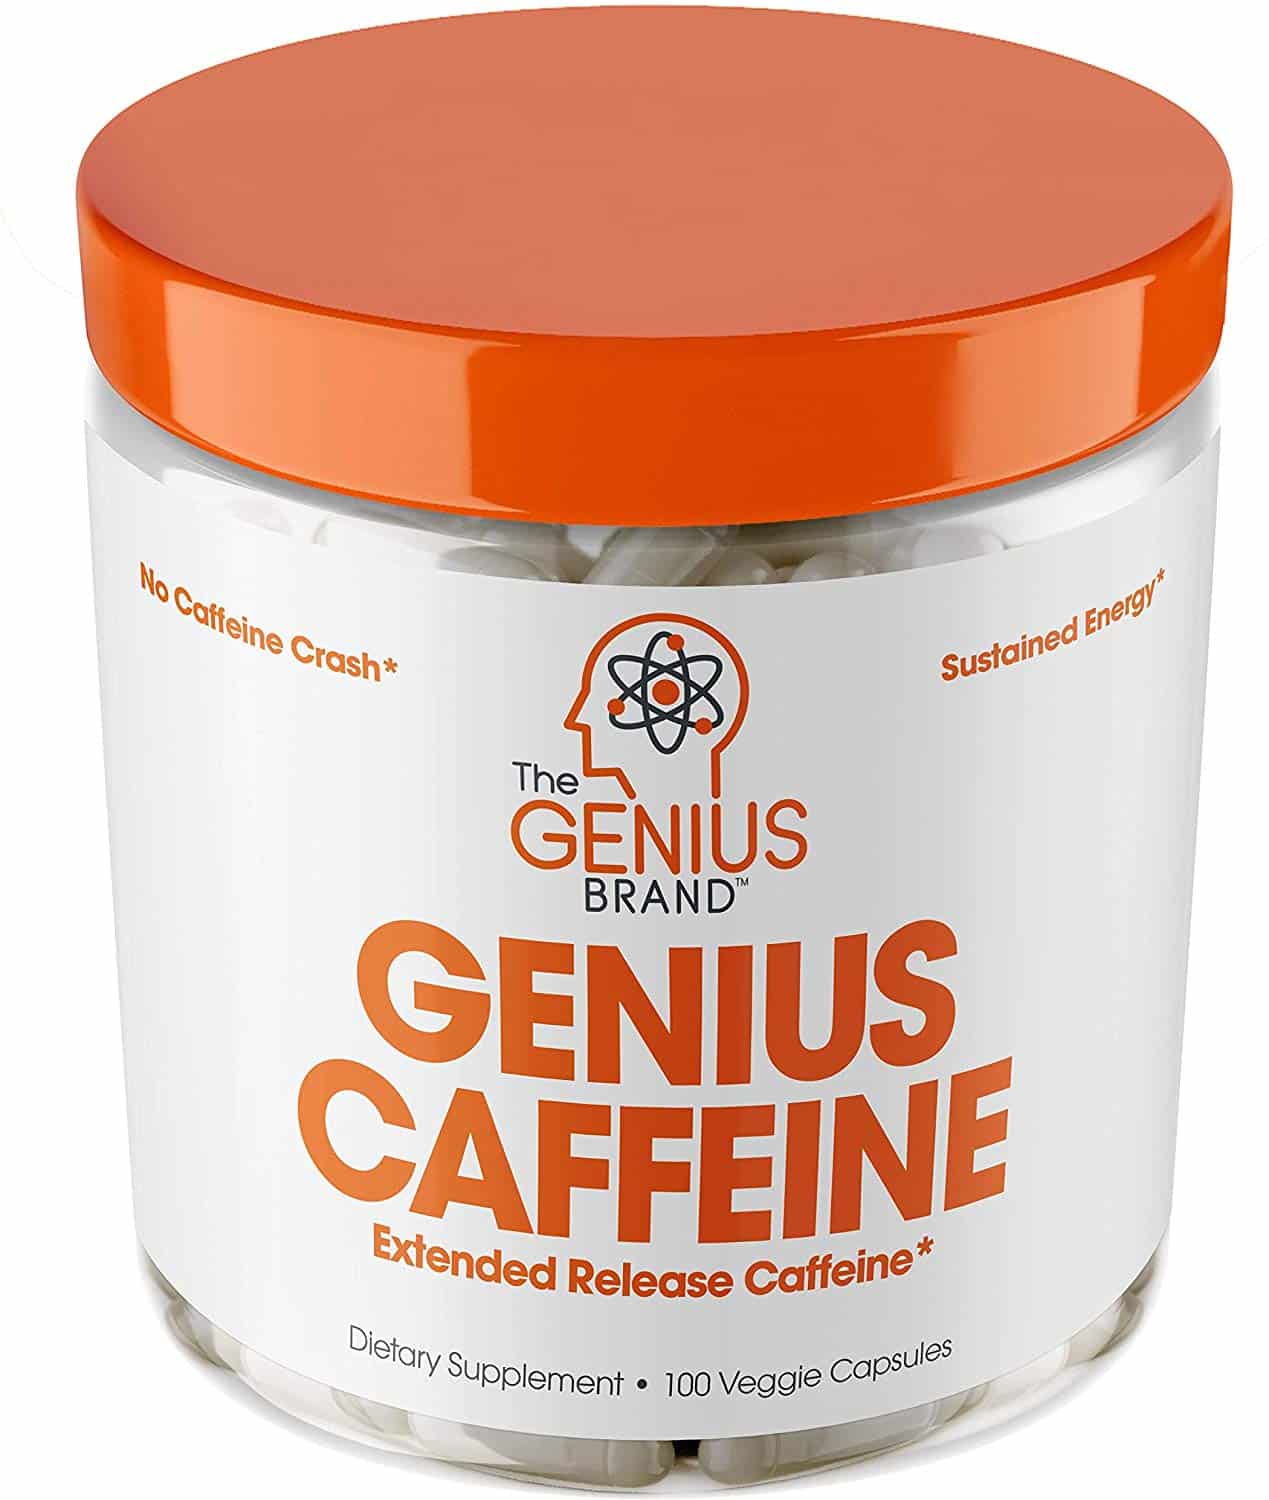 LIGHTNING DEAL!!! Genius Caffeine, Extended Release Microencapsulated Caffeine Pills $7.35 (REG $14.99)